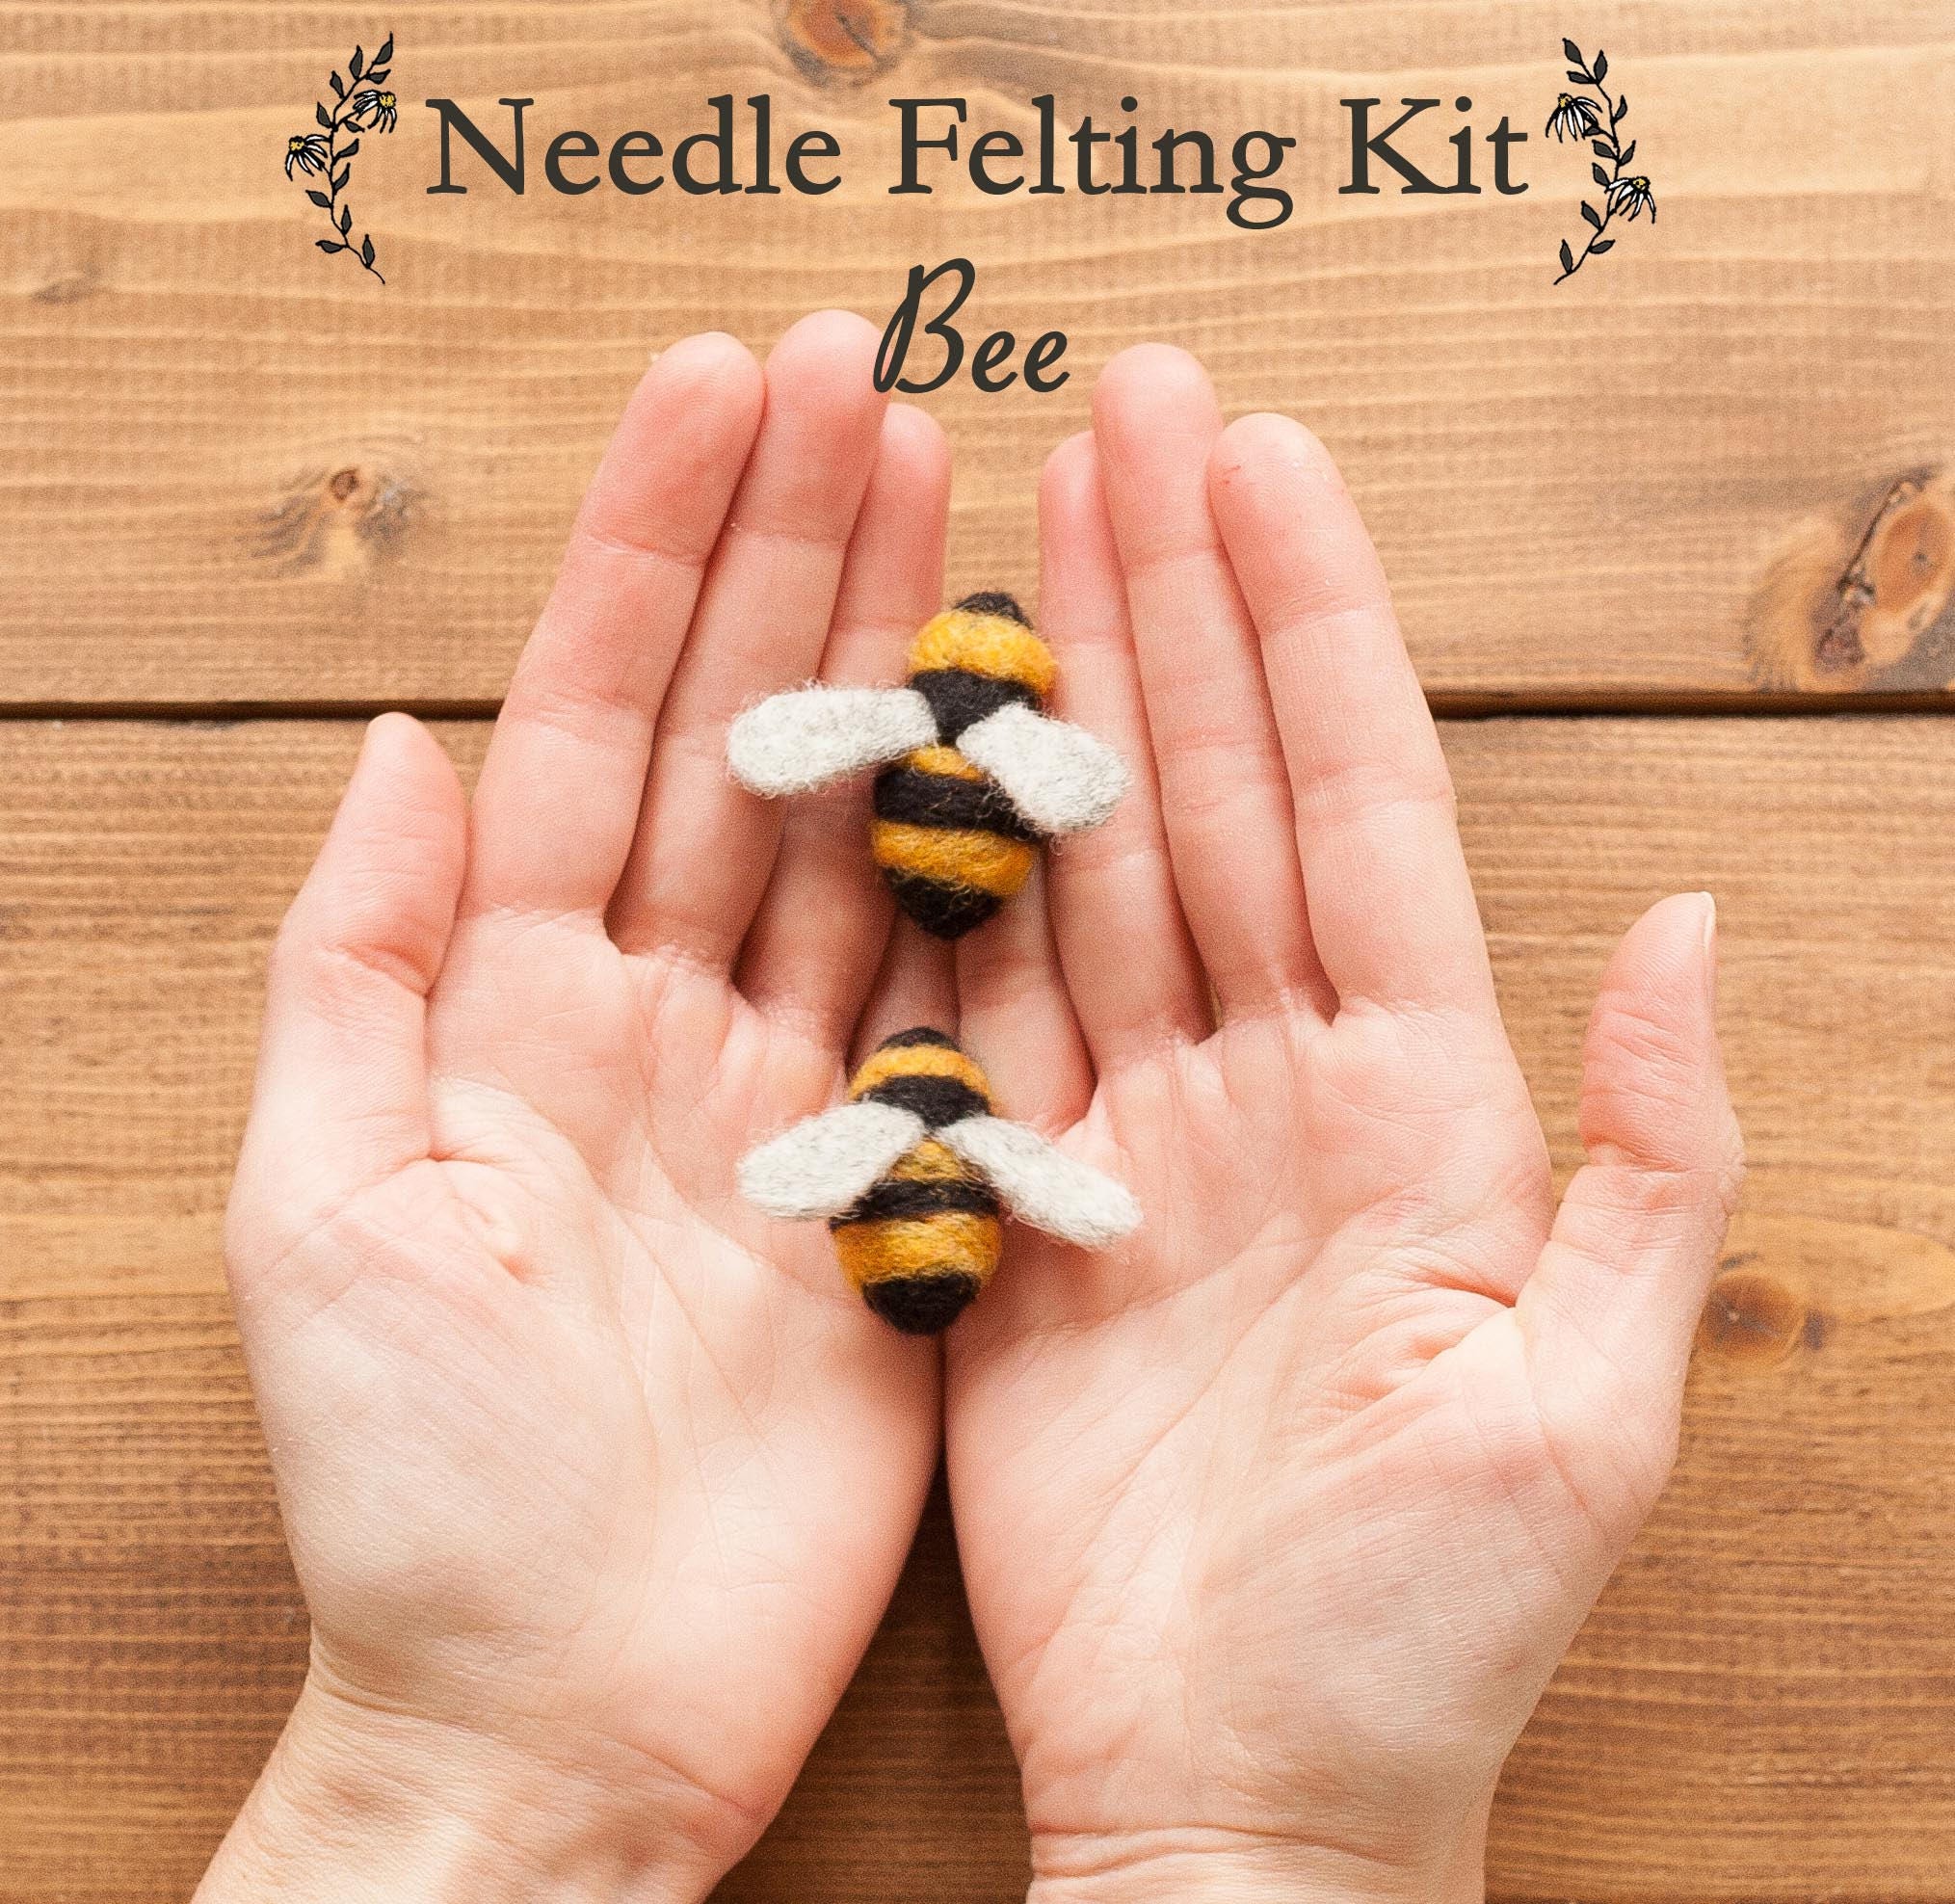 What is Needle Felting?